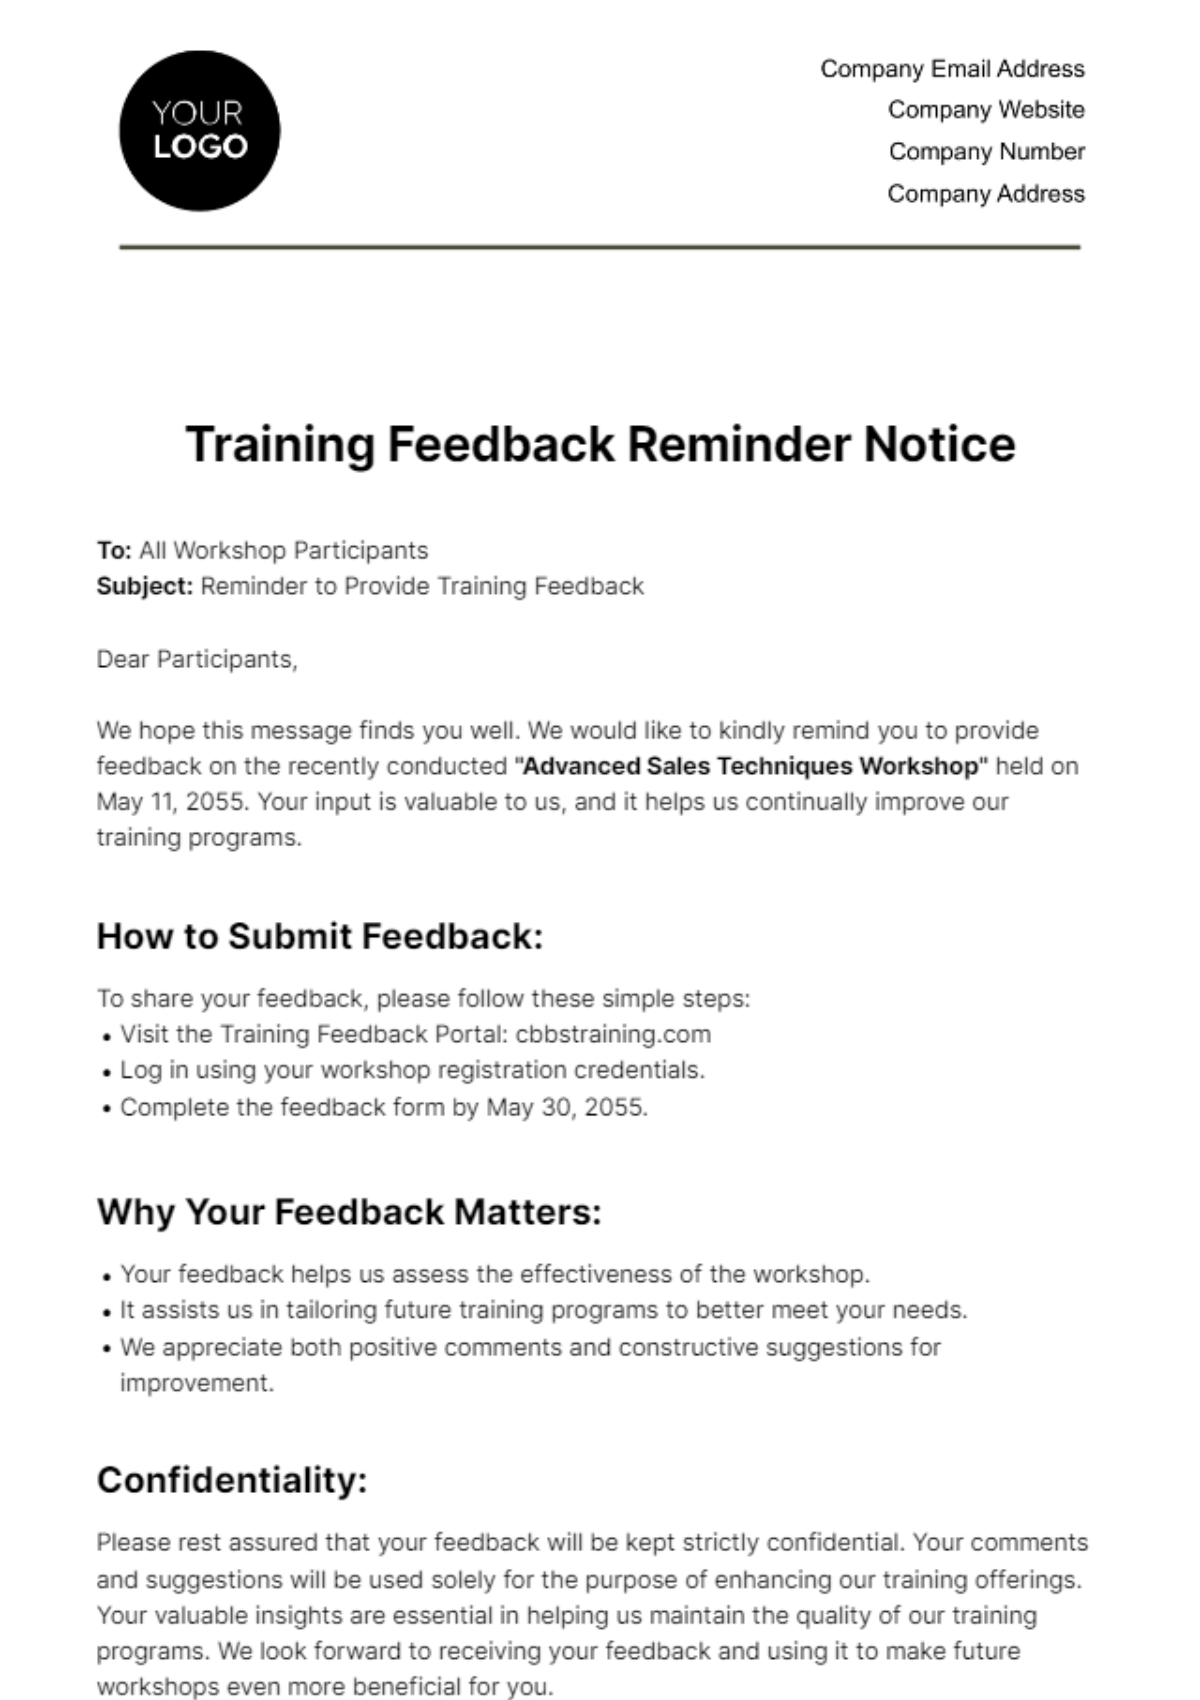 Training Feedback Reminder Notice HR Template